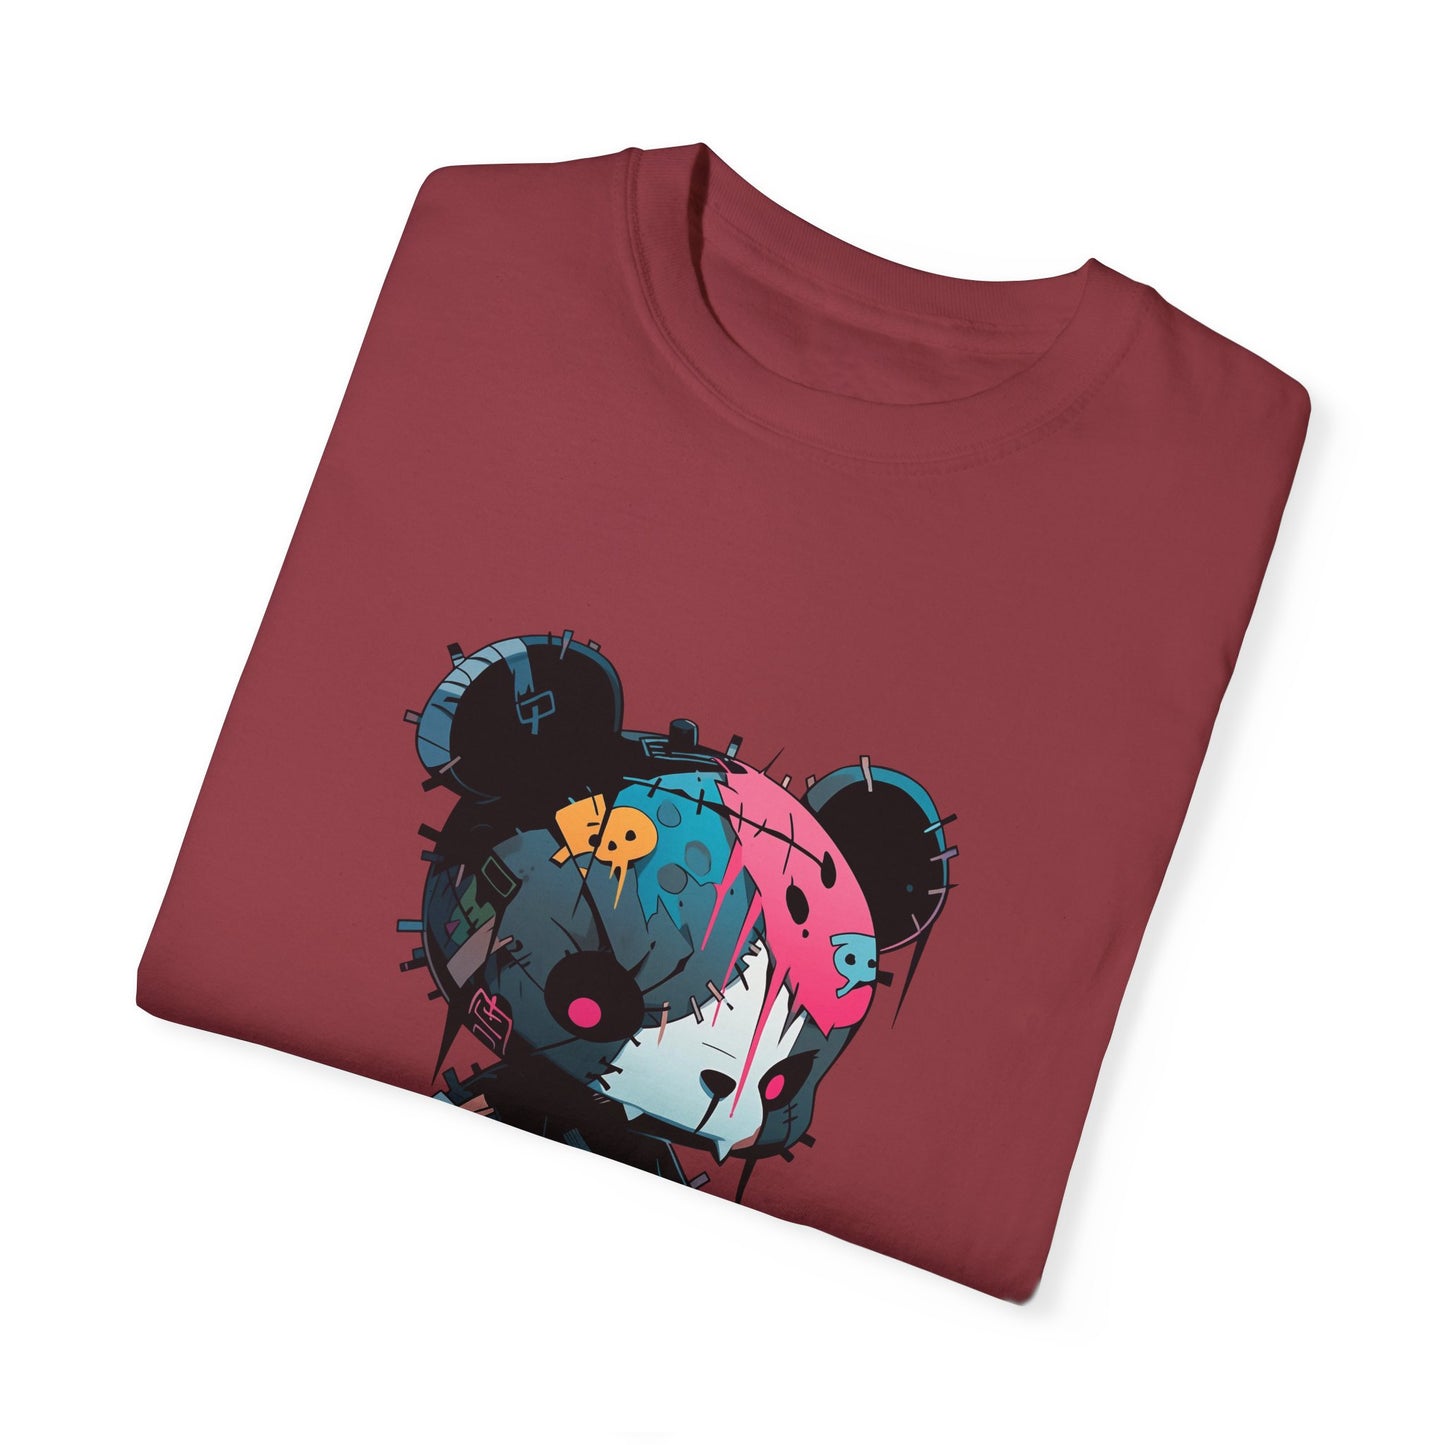 Hip Hop Teddy Bear Graphic Unisex Garment-dyed T-shirt Cotton Funny Humorous Graphic Soft Premium Unisex Men Women Chili T-shirt Birthday Gift-35